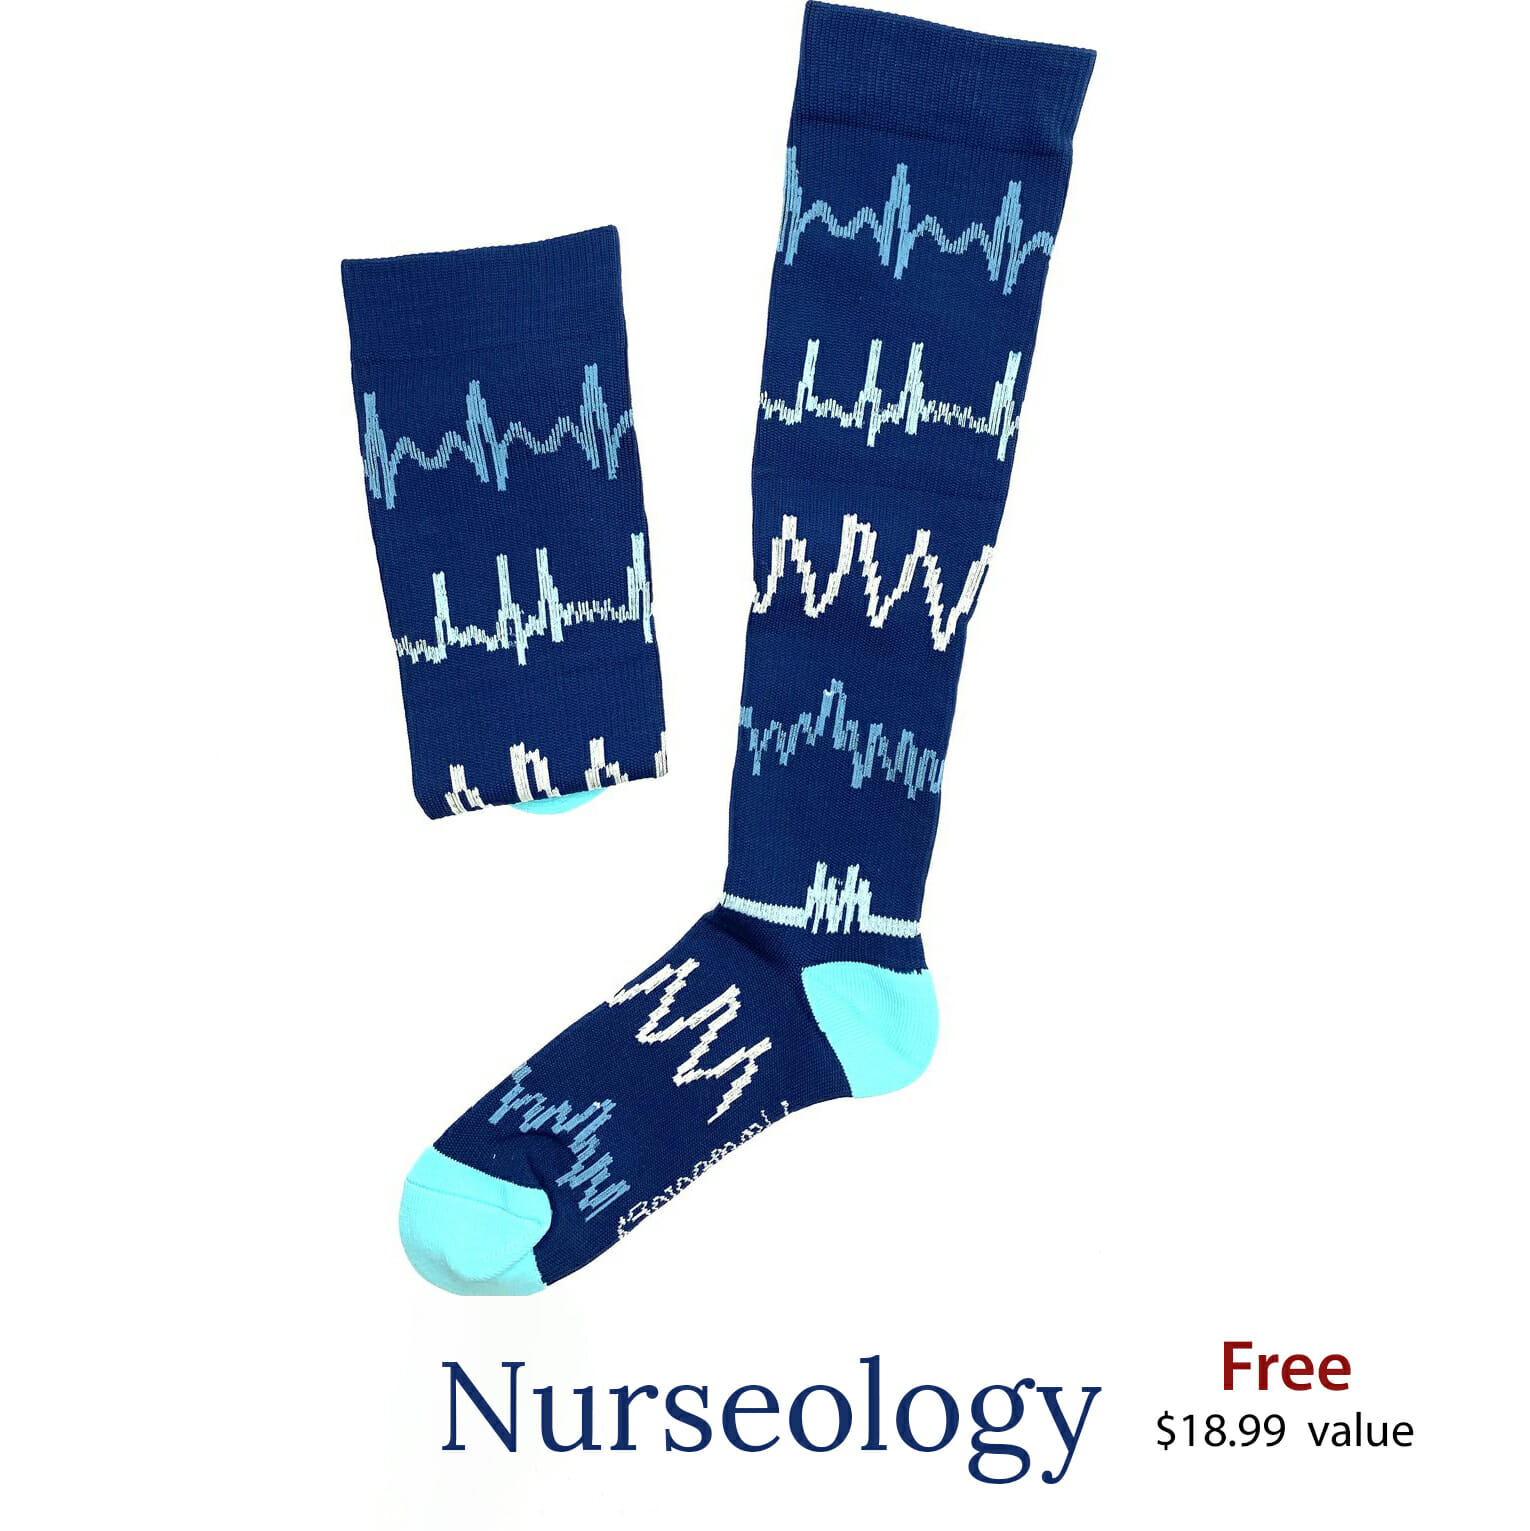 free socks from nurseology